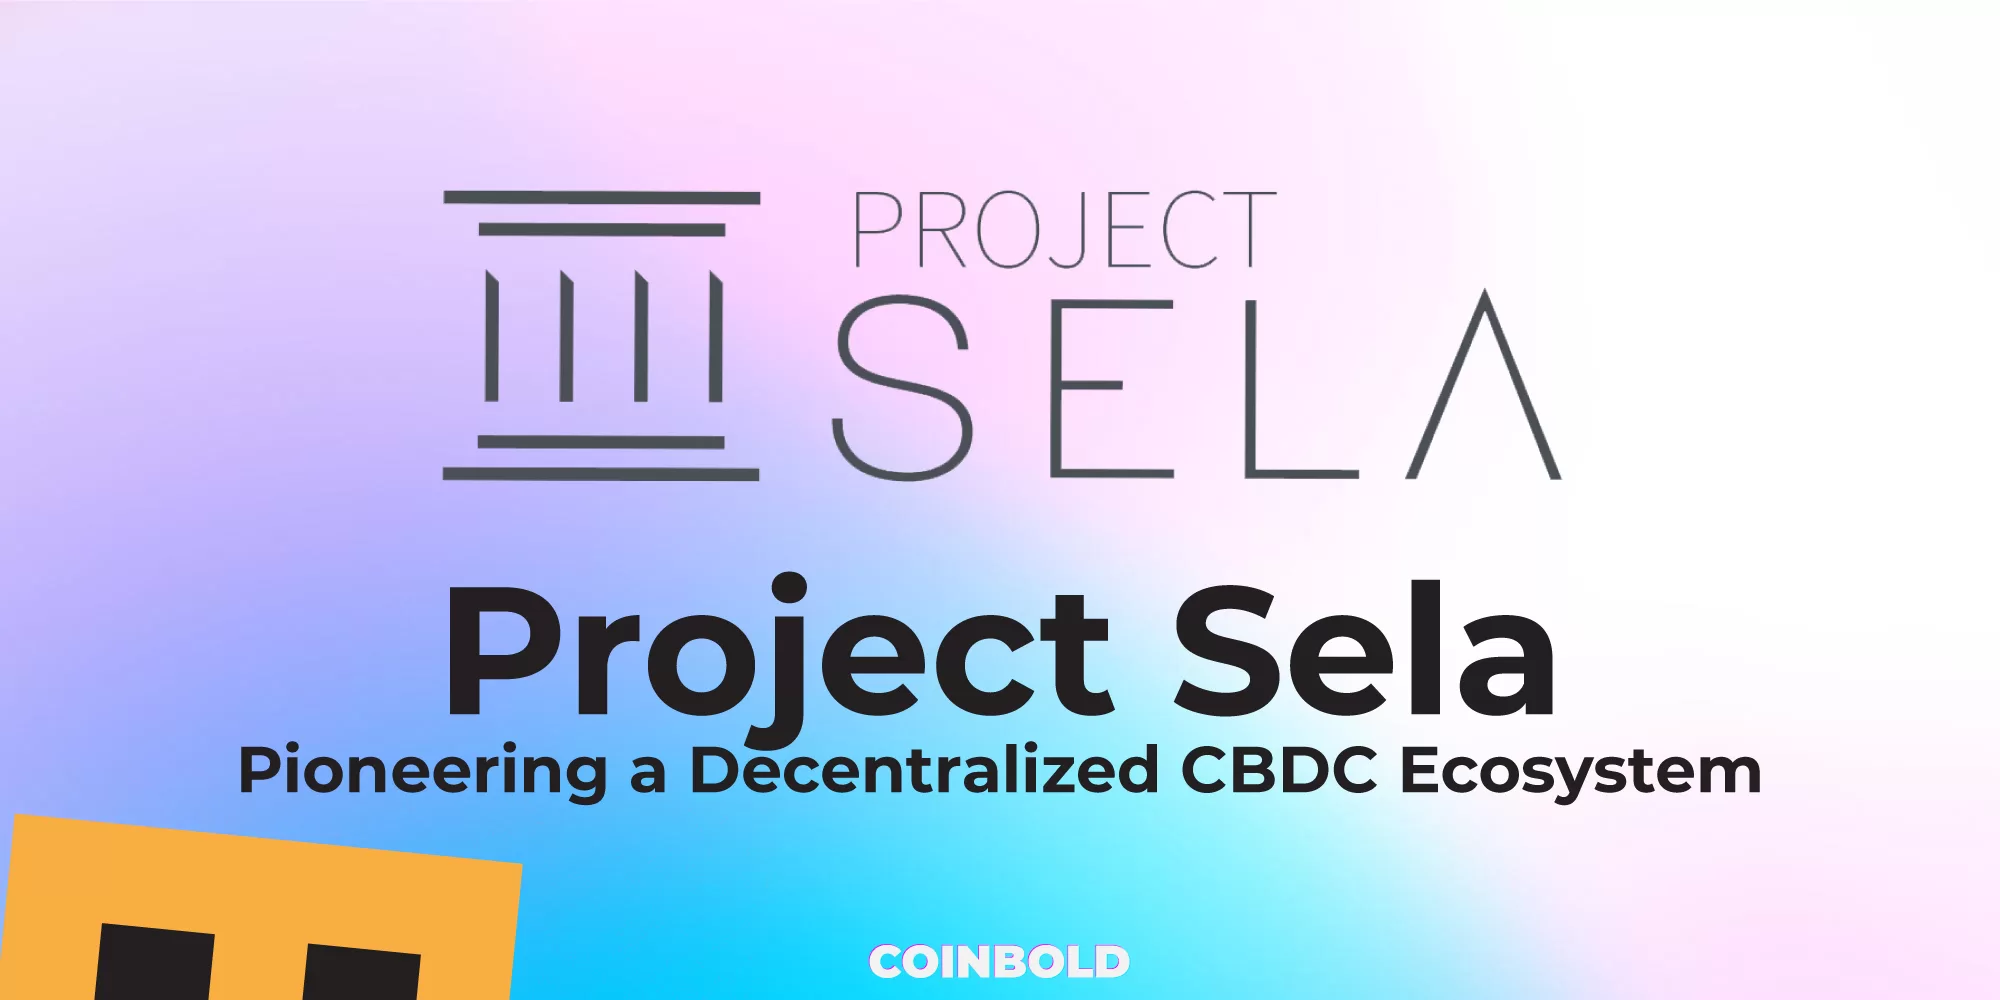 Project Sela Pioneering a Decentralized CBDC Ecosystem